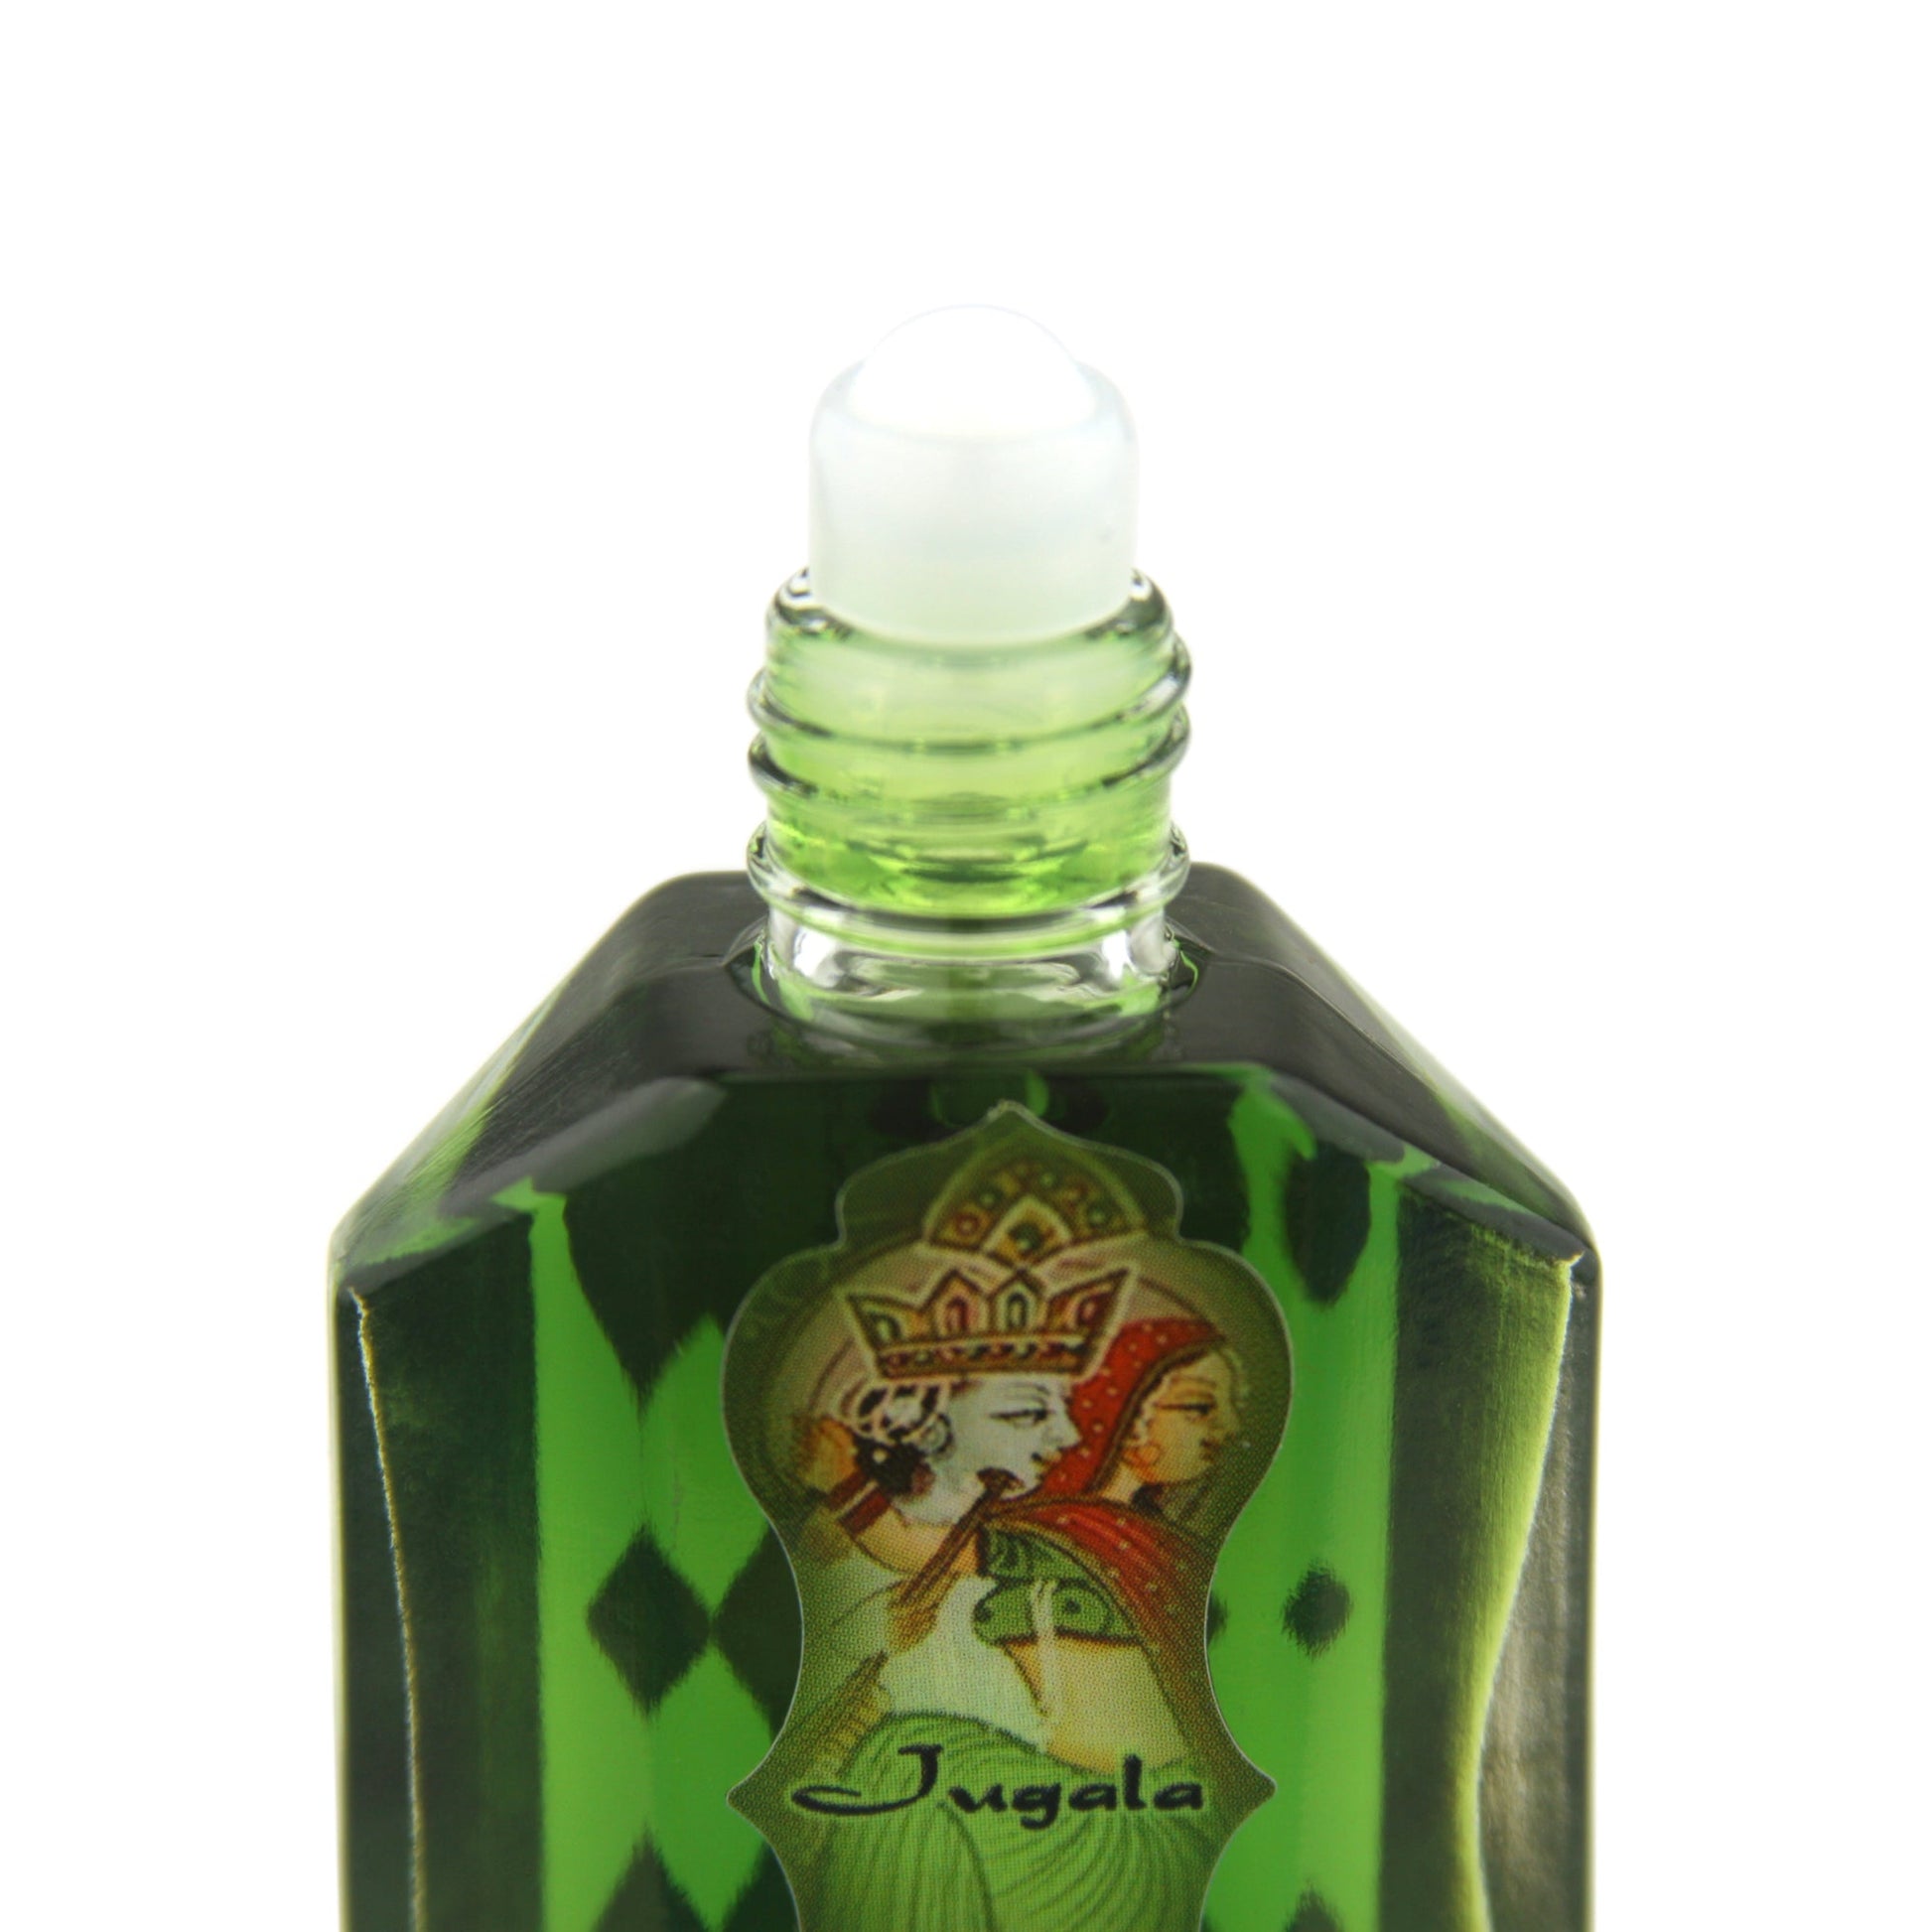 Attar Oil Jugala for Purity - 0.5oz - Unisex - Tree Spirit Wellness